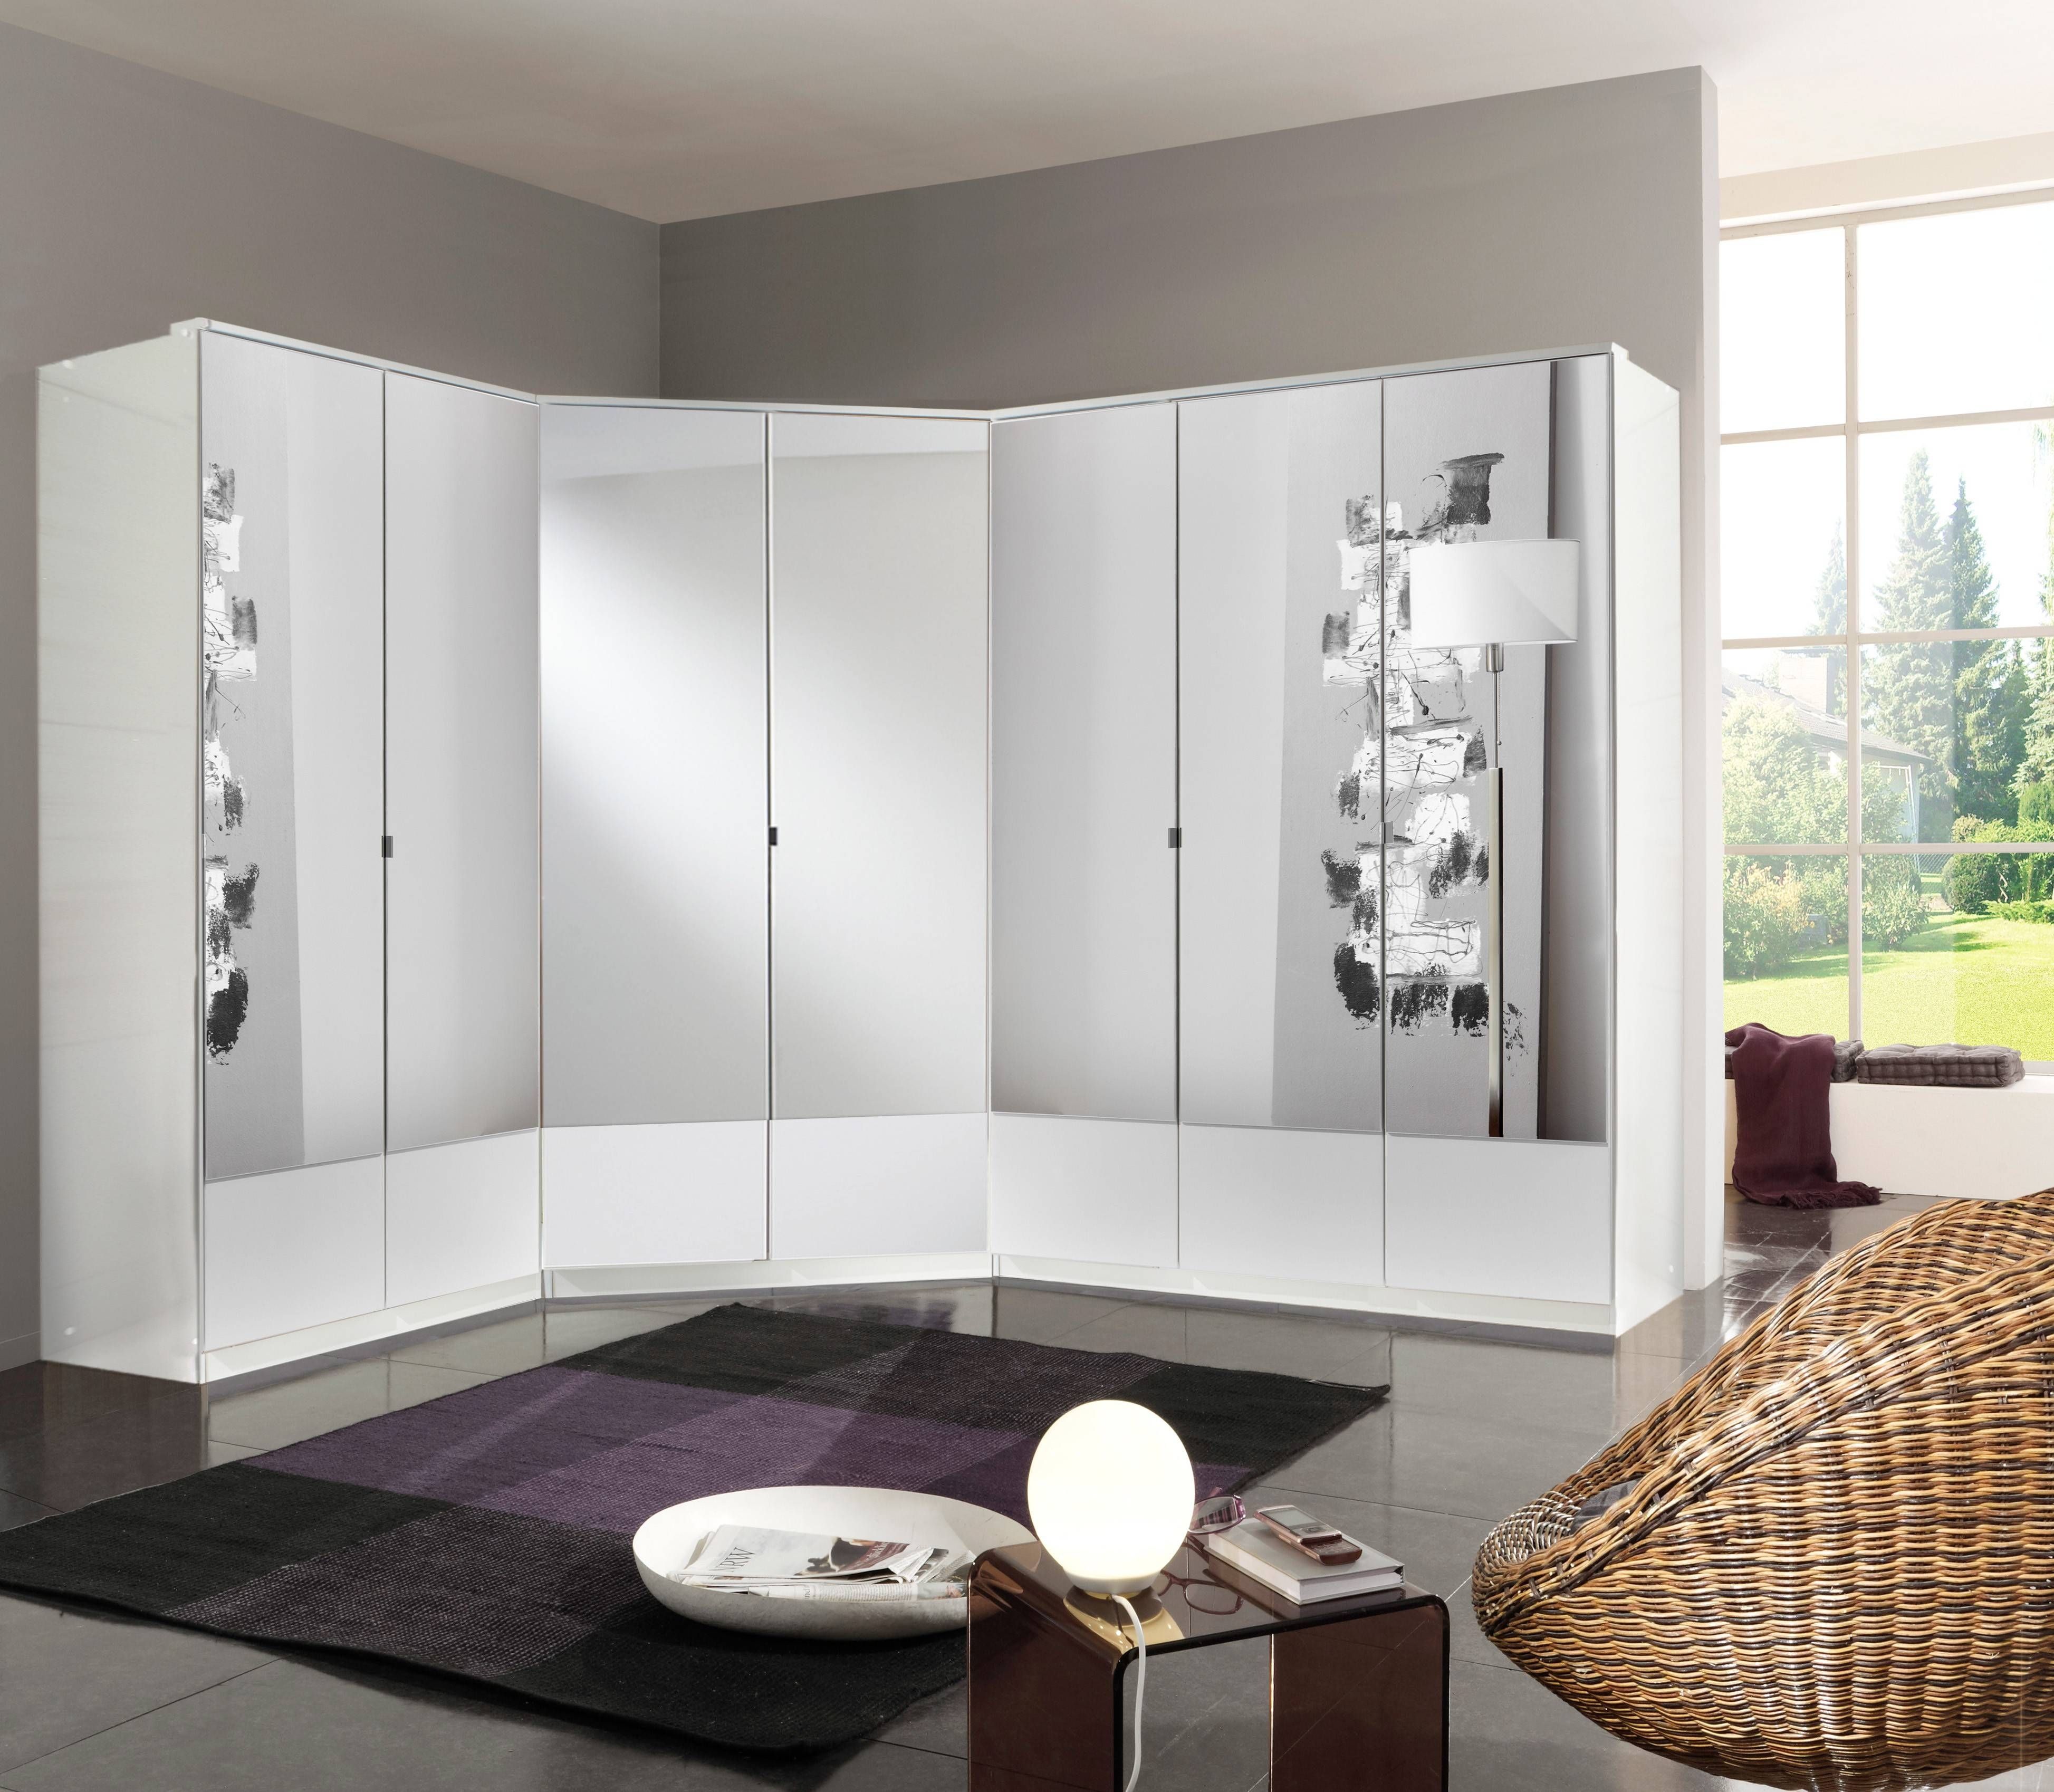 Slumberhaus 'imago' 7 Door Corner Wardrobe Fitment With White And For Corner Mirror Wardrobes (View 10 of 15)